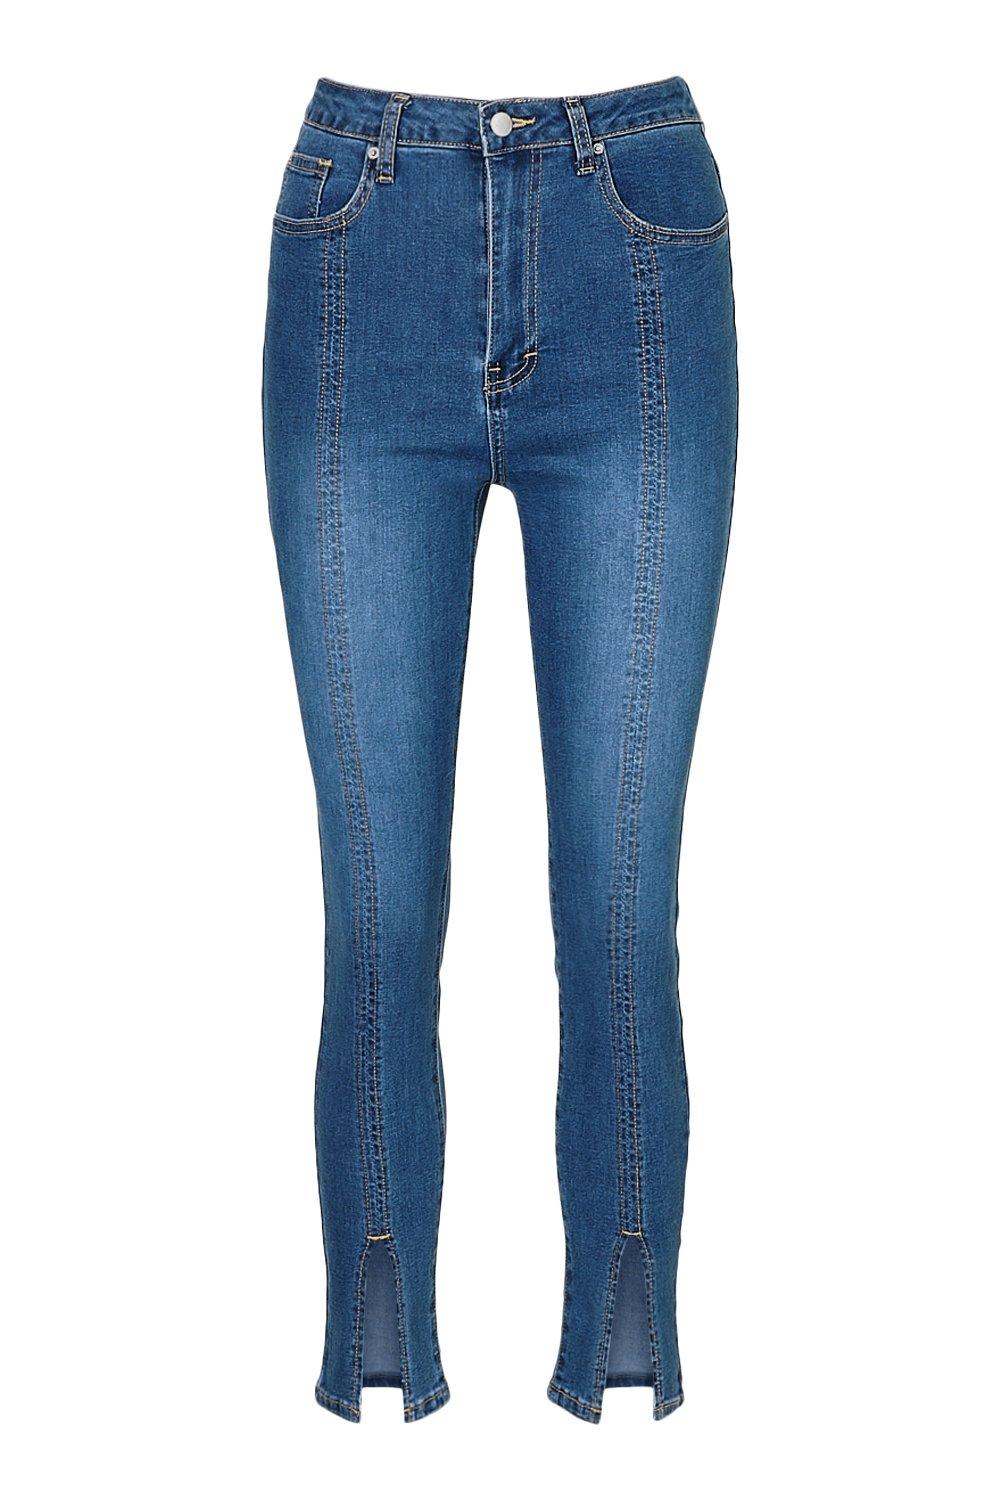 https://media.boohoo.com/i/boohoo/fzz56294_mid%20blue_xl_2/female-mid%20blue-front-seam-detail-skinny-jeans